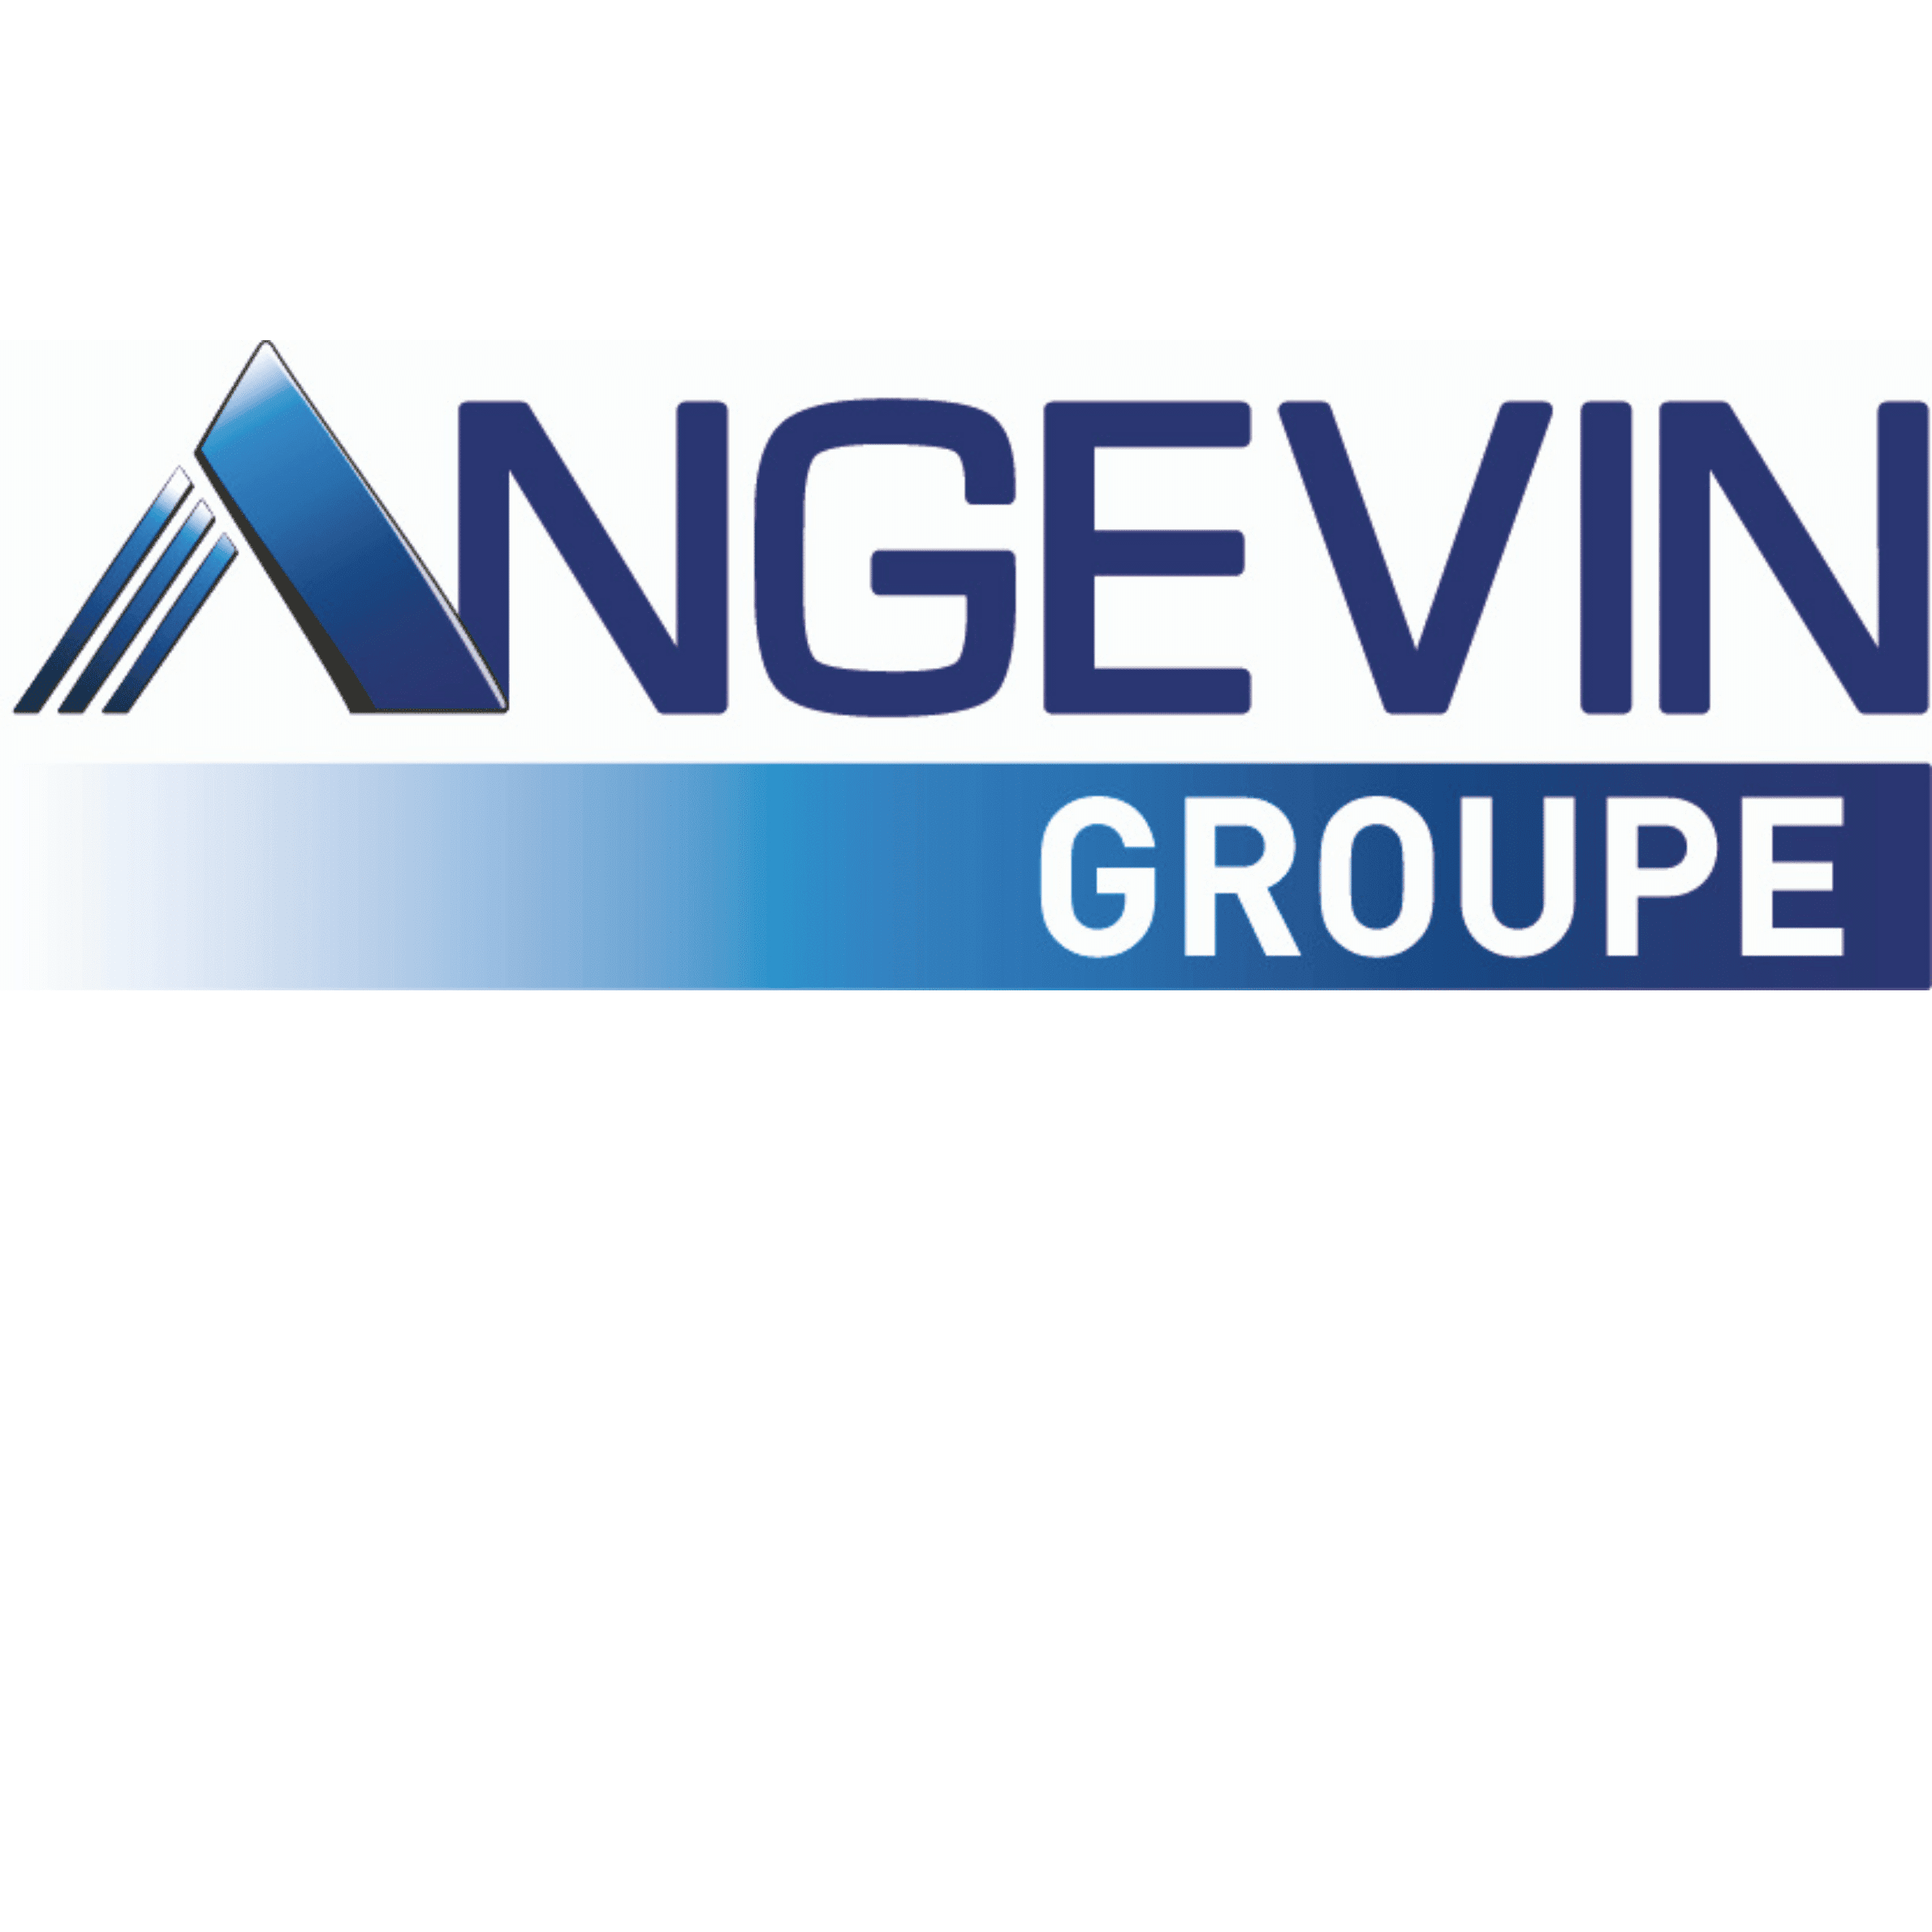 Angevin groupe logo